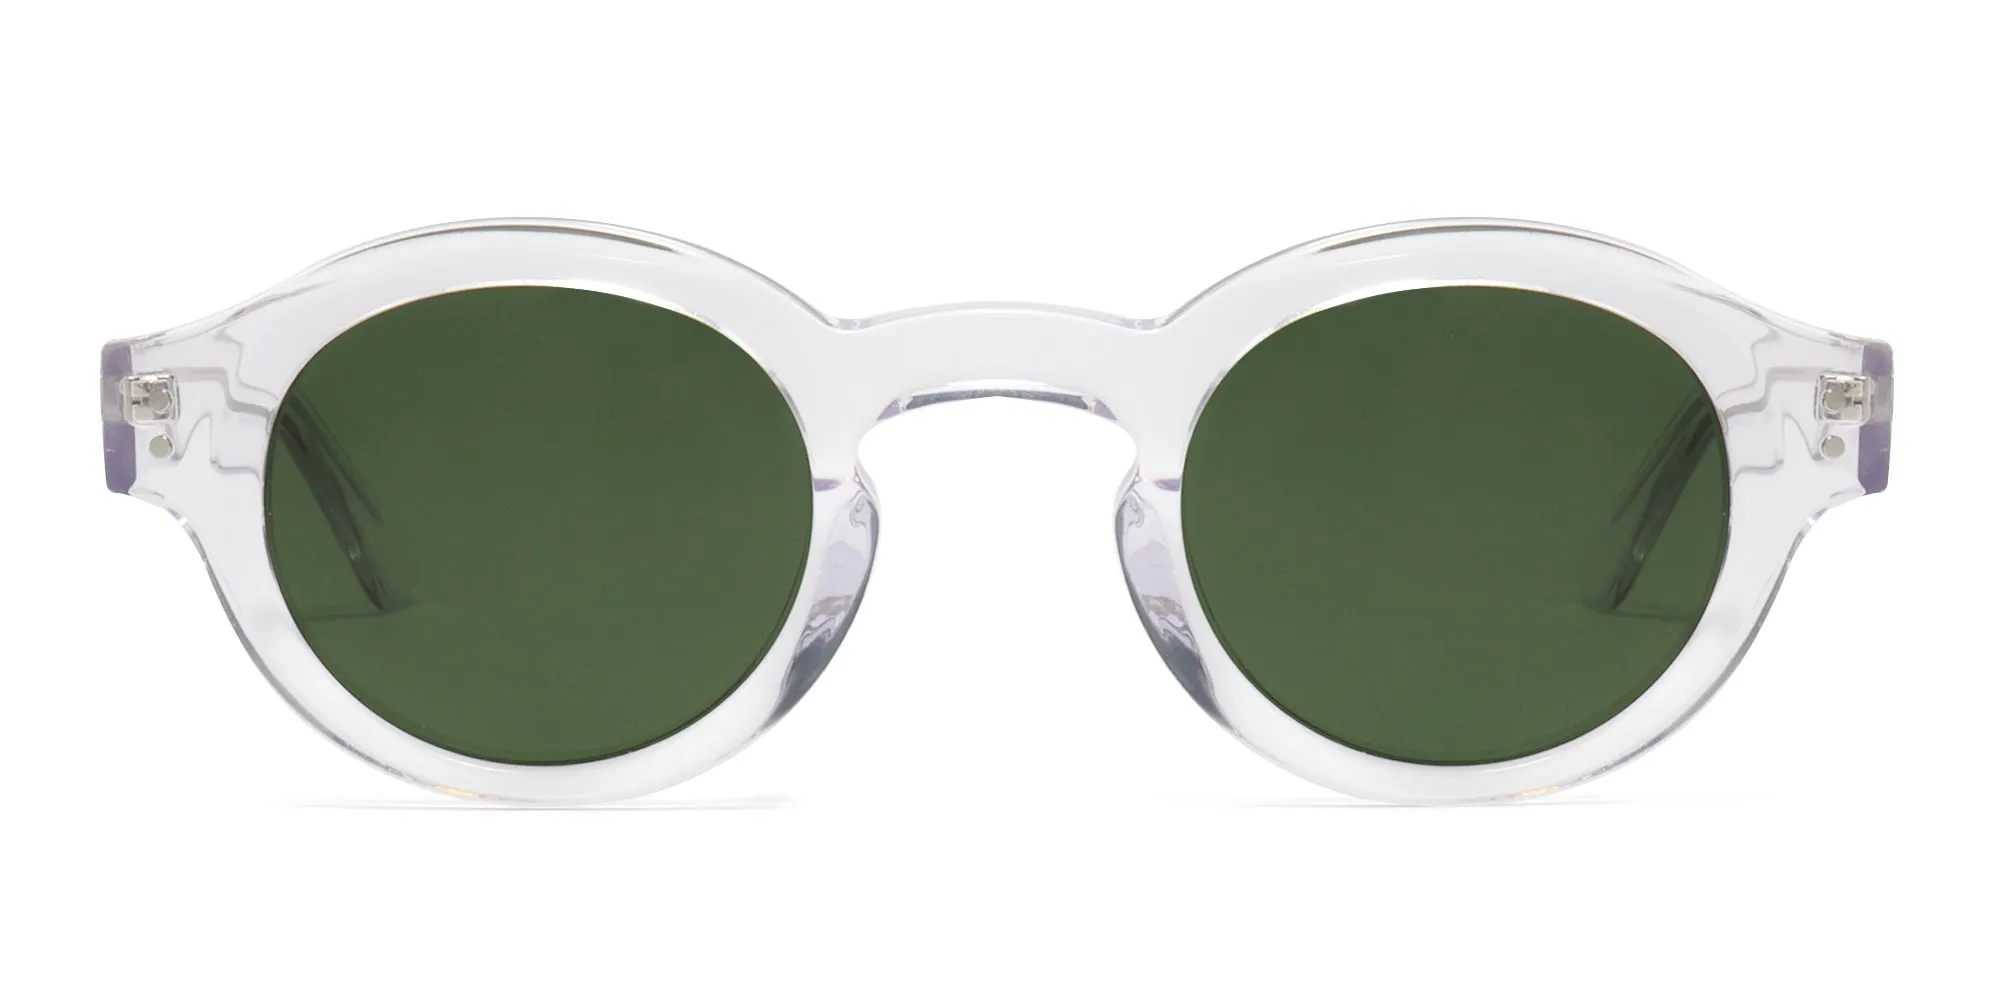 Transparent Green Full Rim Round Vincent Chase Polarized Blend Edit VC  S15547-C8 Sunglasses at LensKart.com